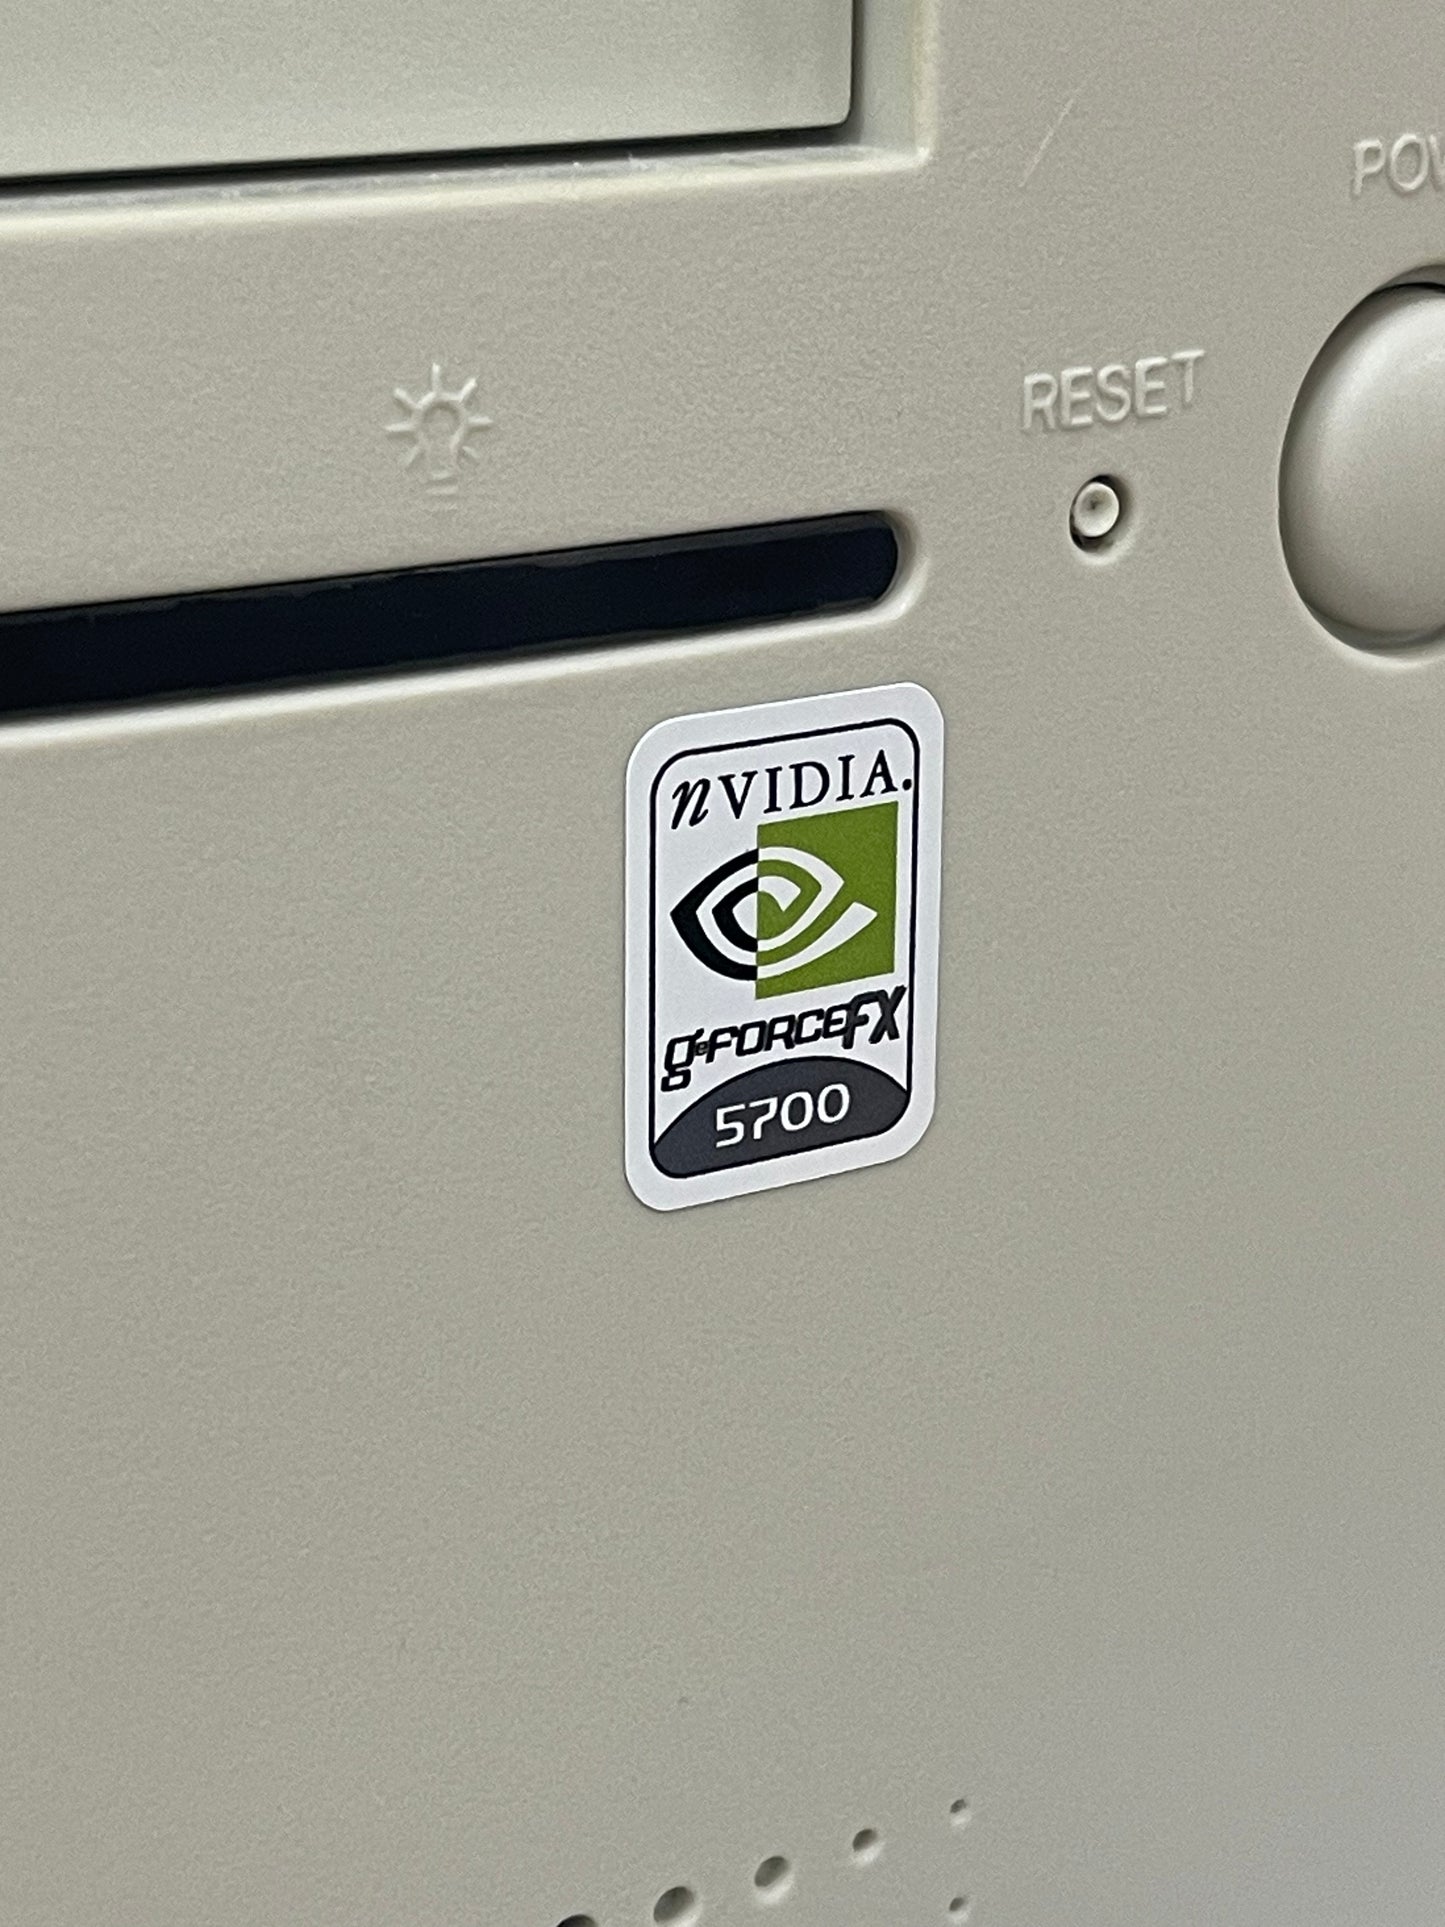 Nvidia Geforce FX 5700 Video Graphics Case Badge Sticker - White